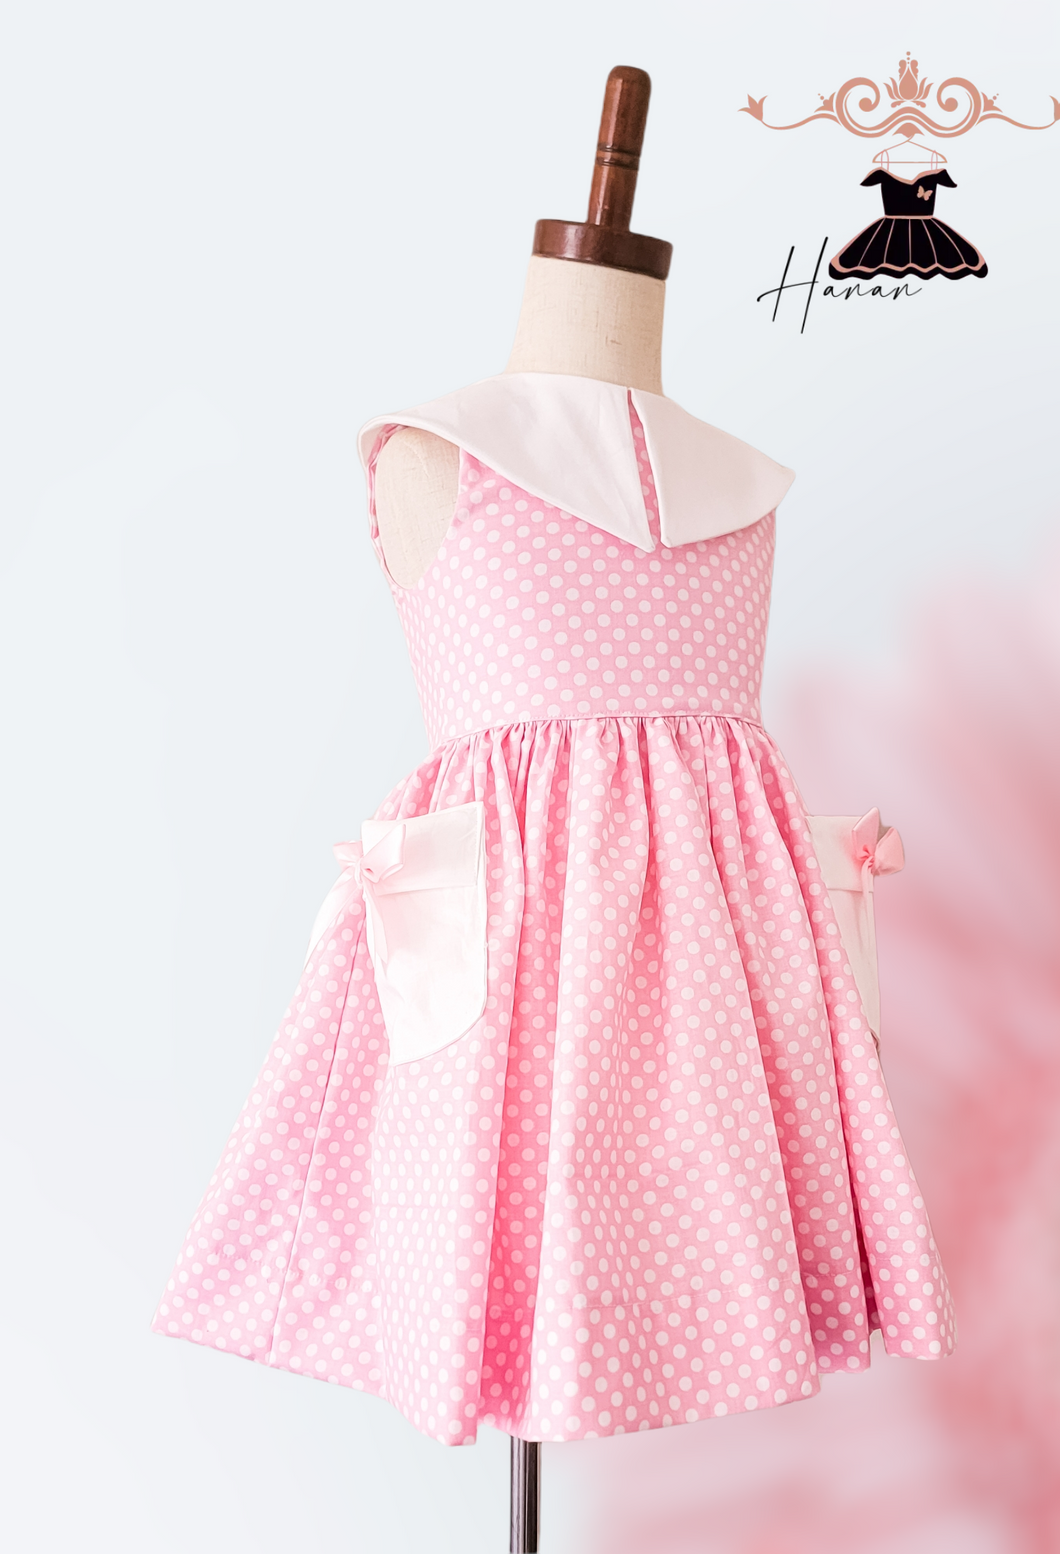 Pink polka dot dress